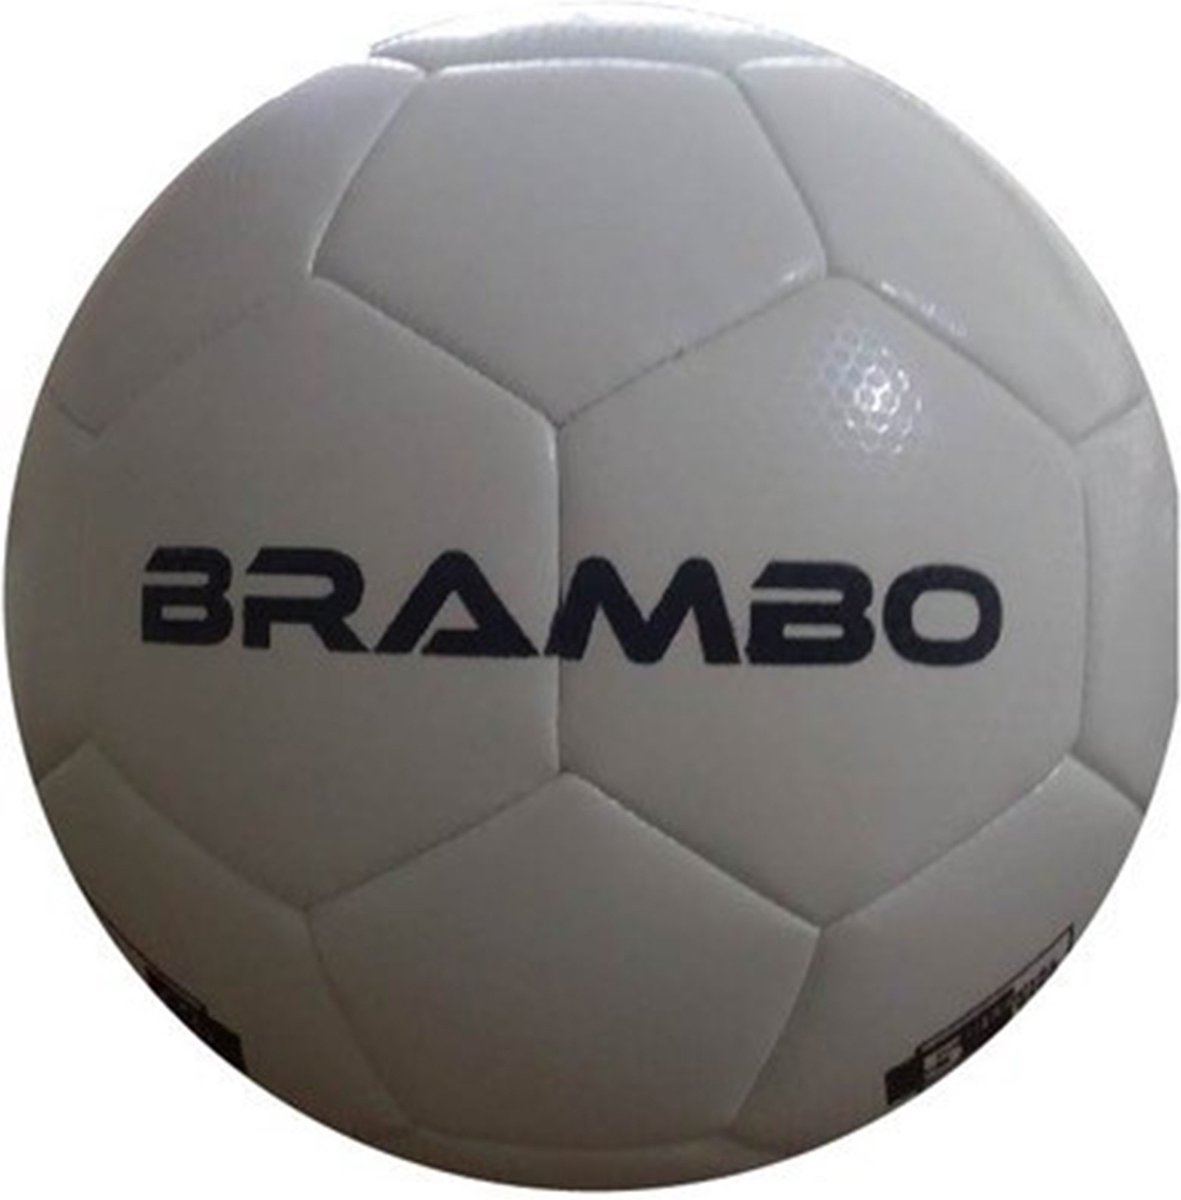 Brambo Voetbal MT